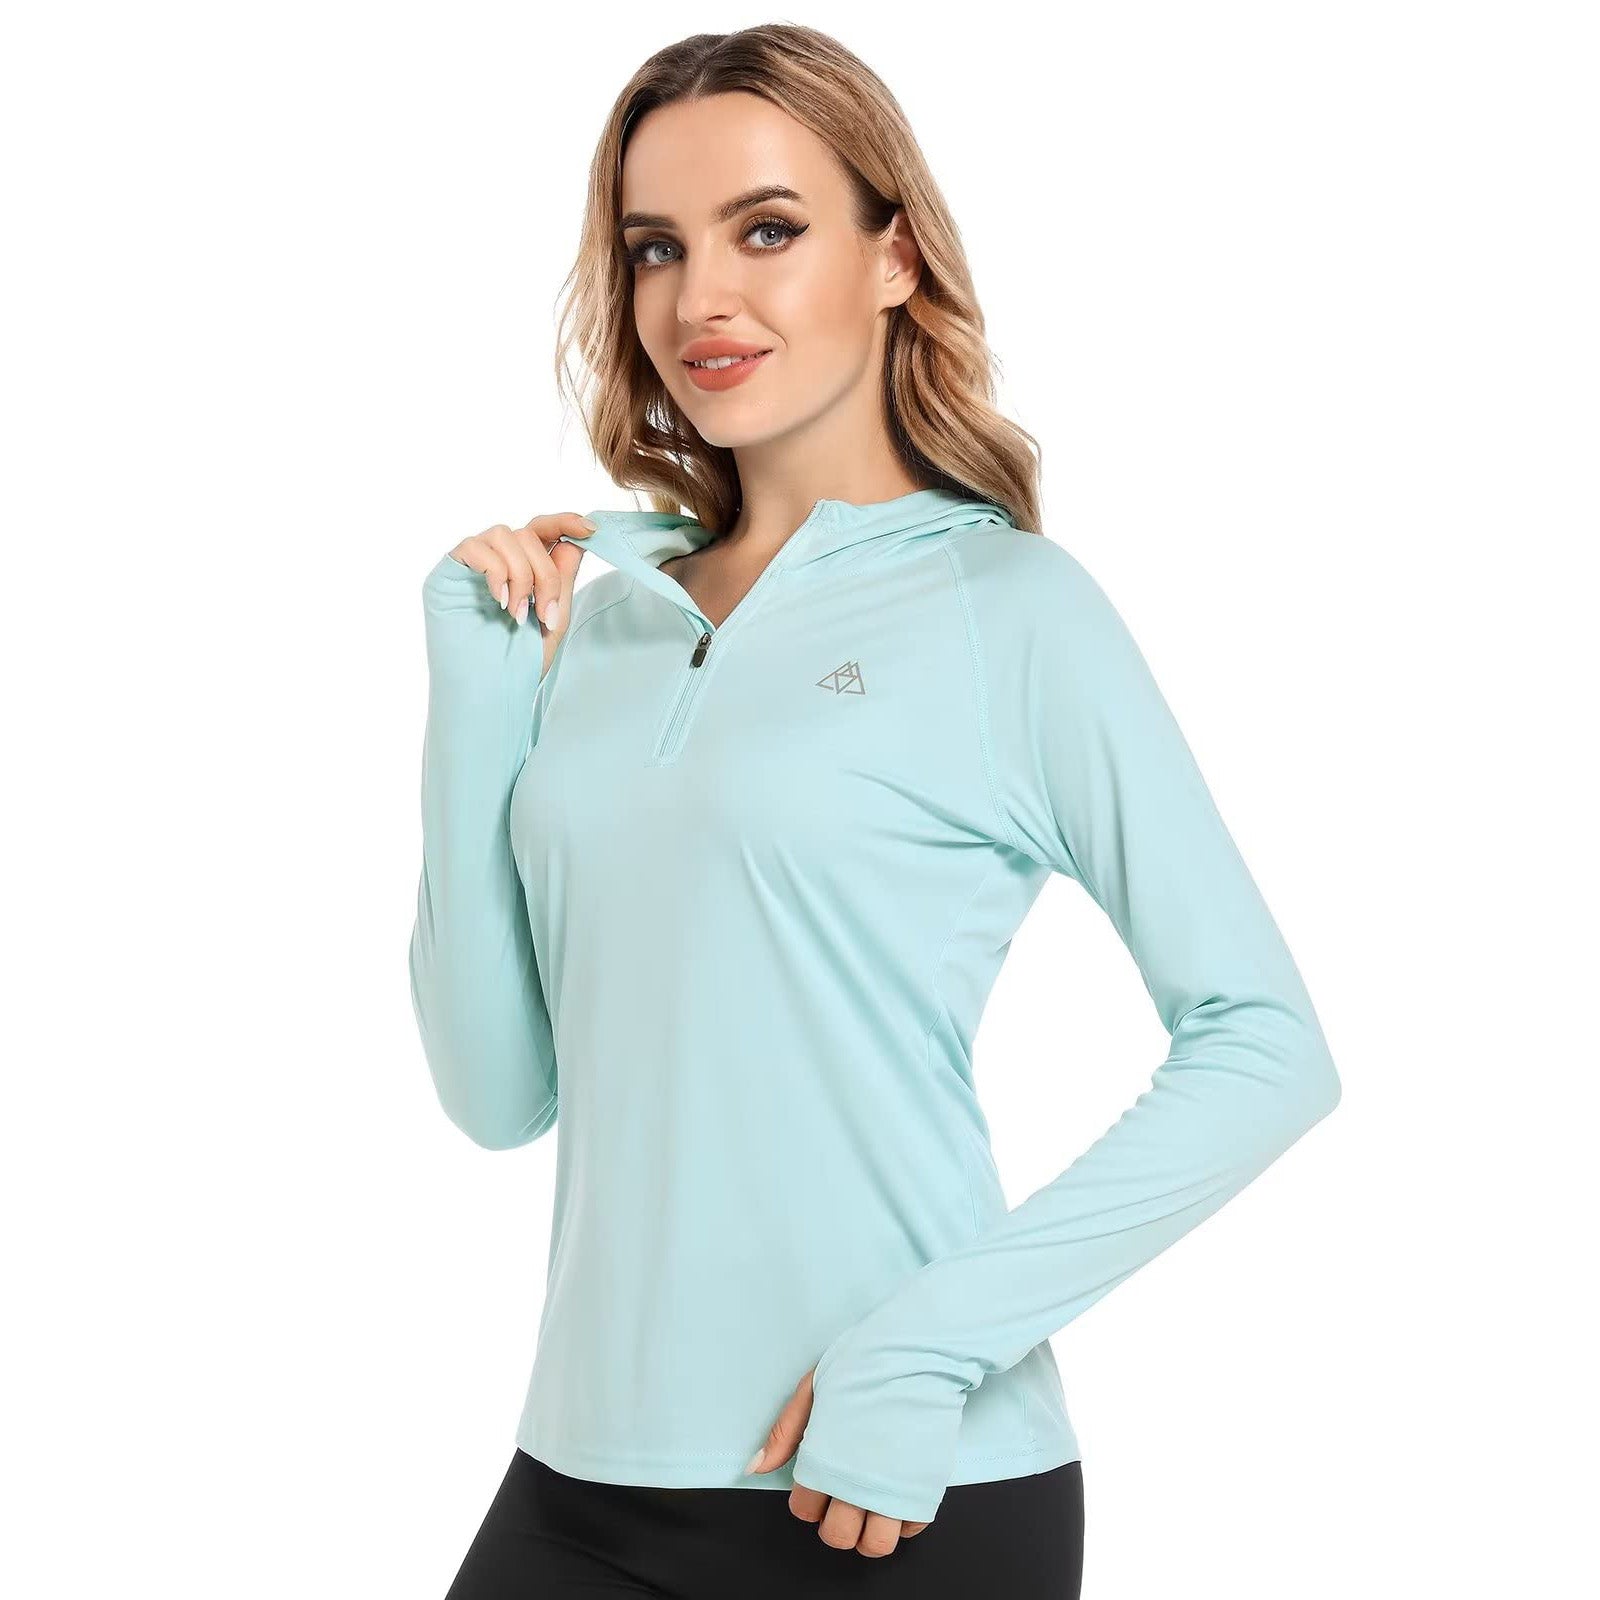 Baleaf Women's Thermal Fleece Tops Long Sleeve Running t-Shirt with  Thumbholes Zipper Pocket White Size M